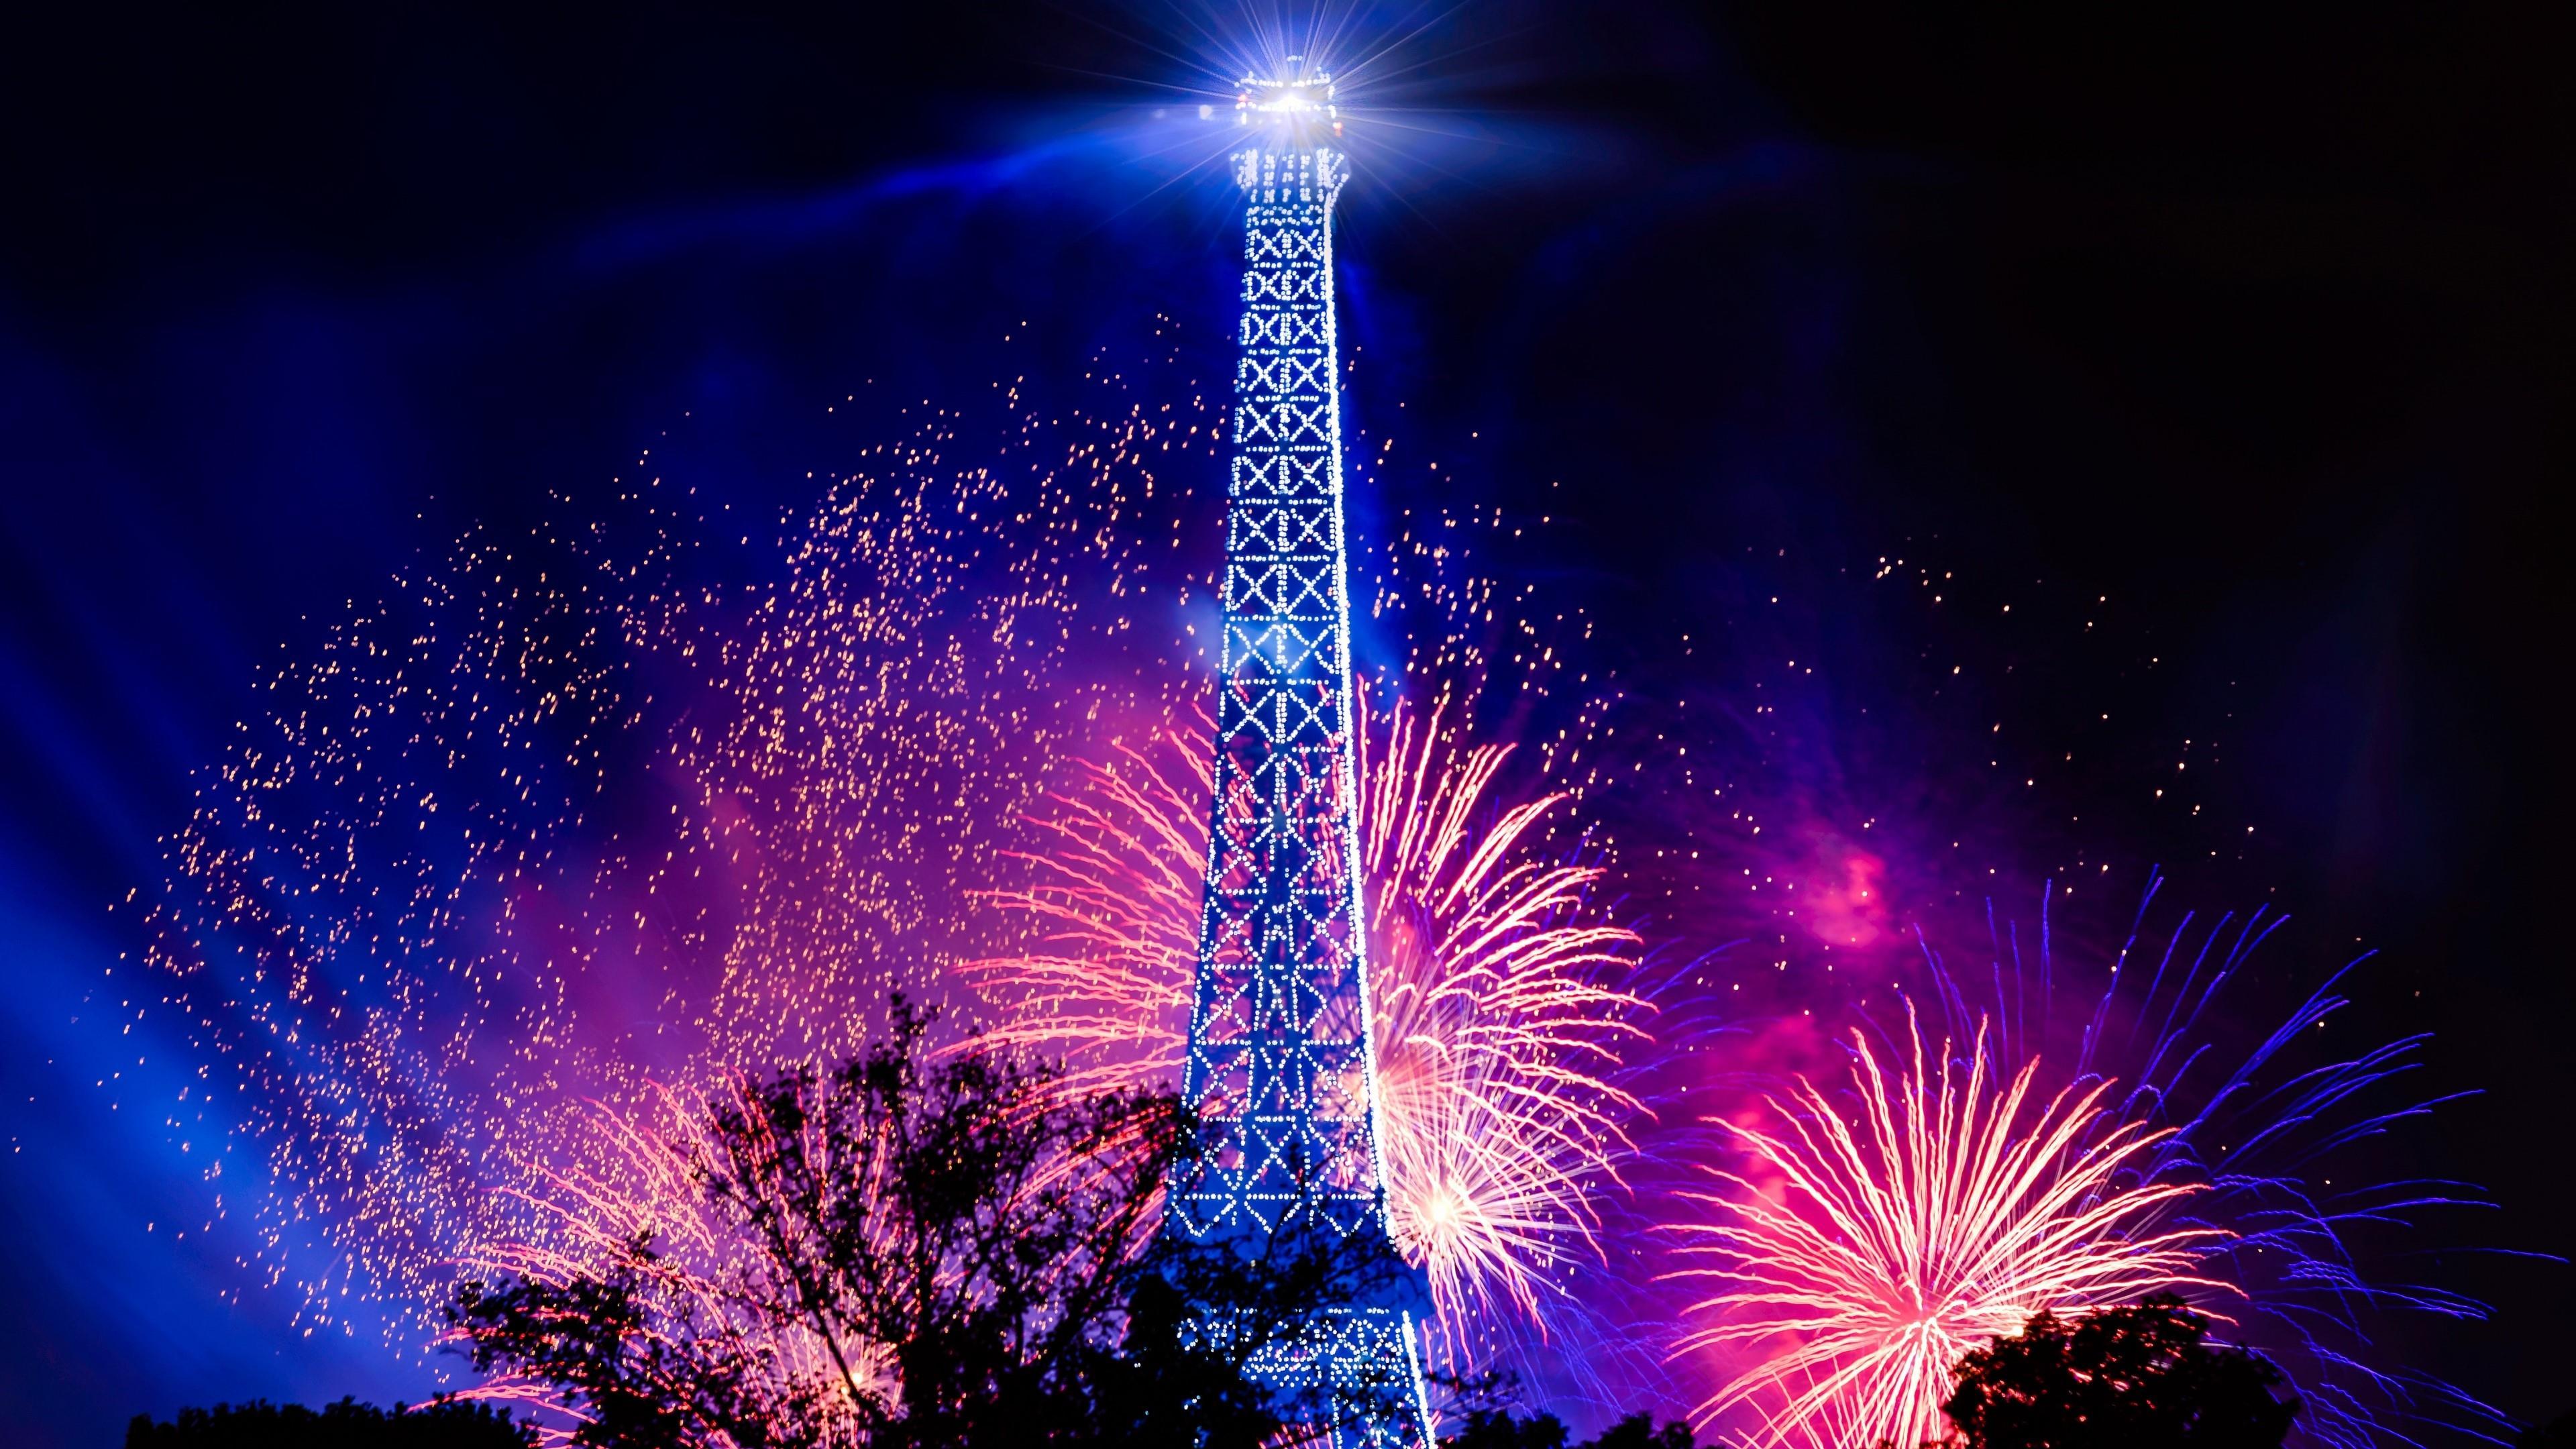 Eiffel Tower With Fireworks 4K UltraHD Wallpaper. Wallpaper Studio